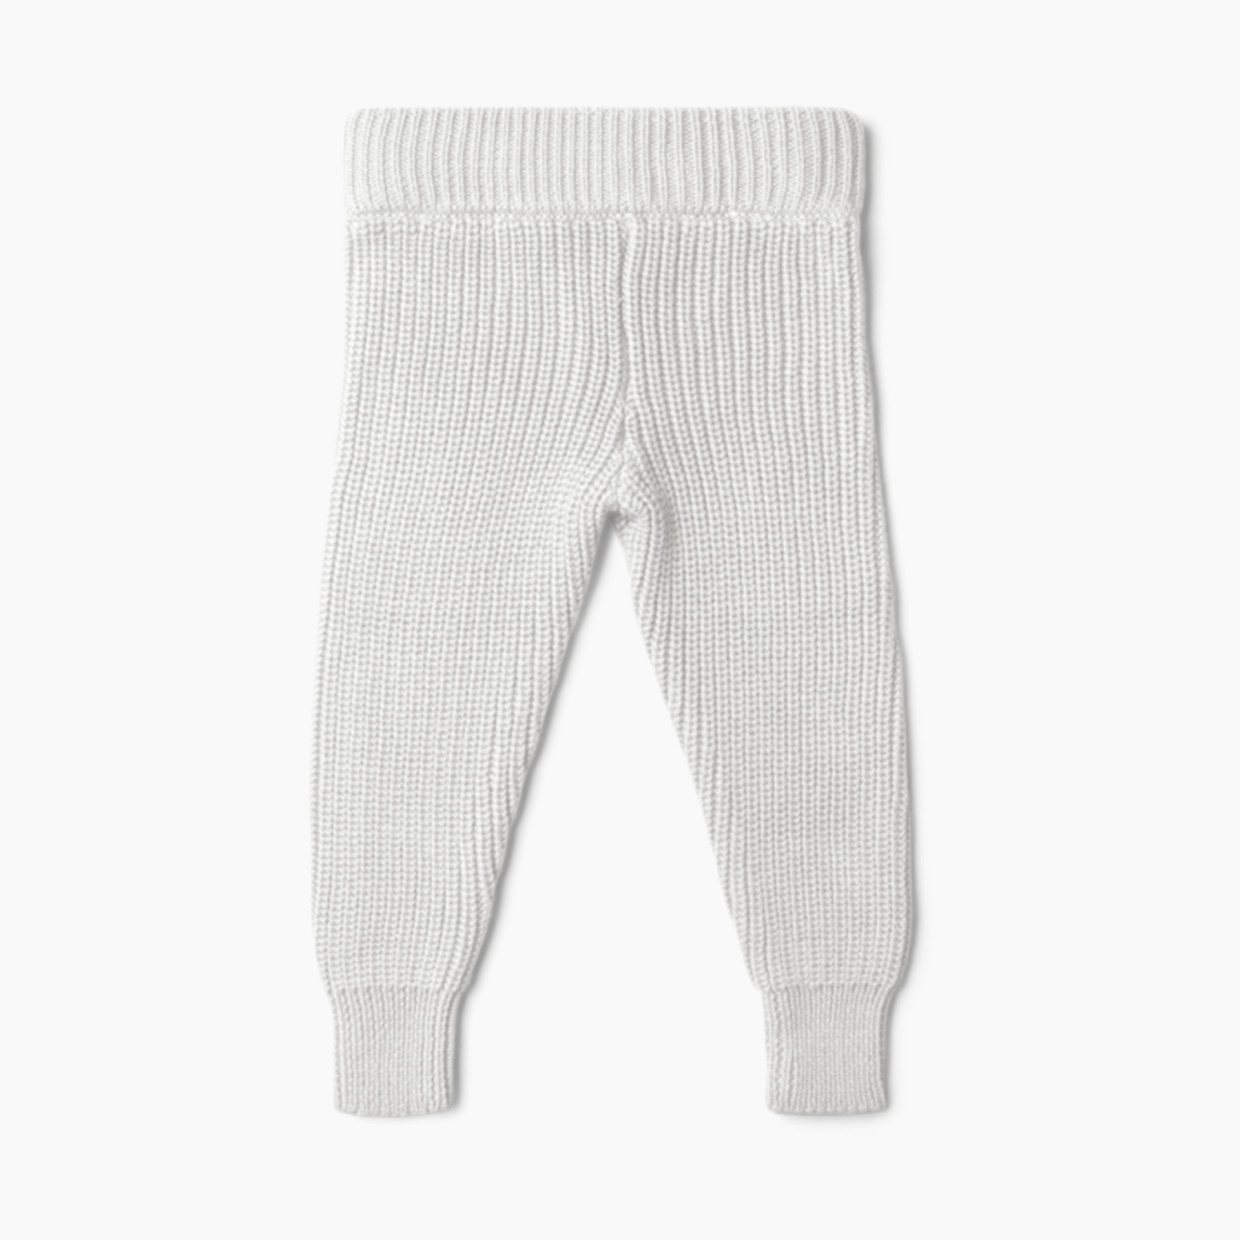 Goumi Kids Organic Cotton Knit Pant - Milk, 9-12 Months.